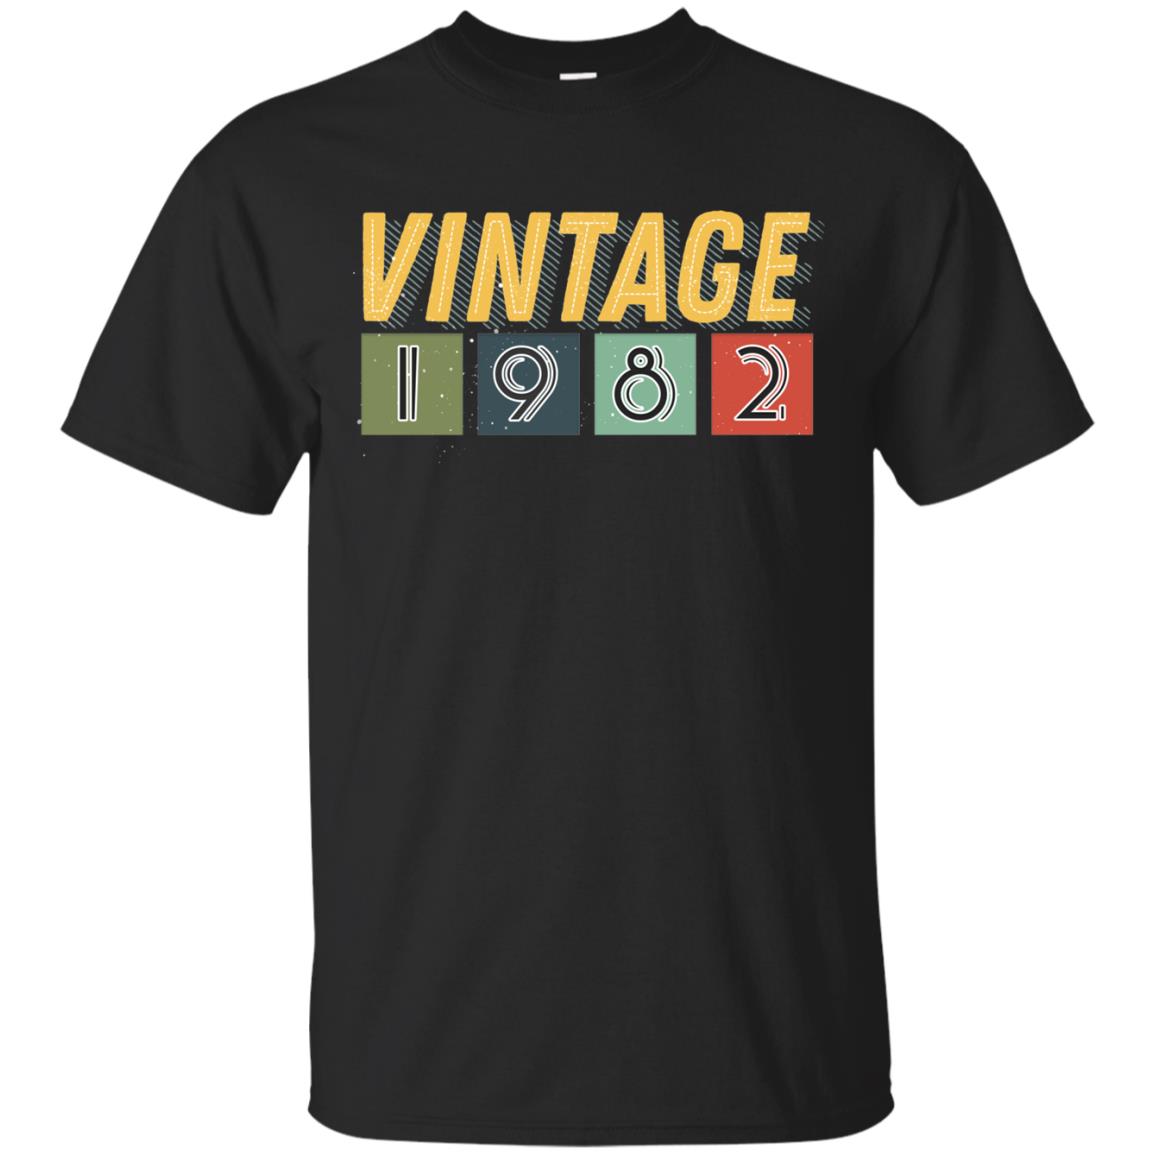 Vintage 1982 36th Birthday Gift Shirt For Mens Or WomensG200 Gildan Ultra Cotton T-Shirt